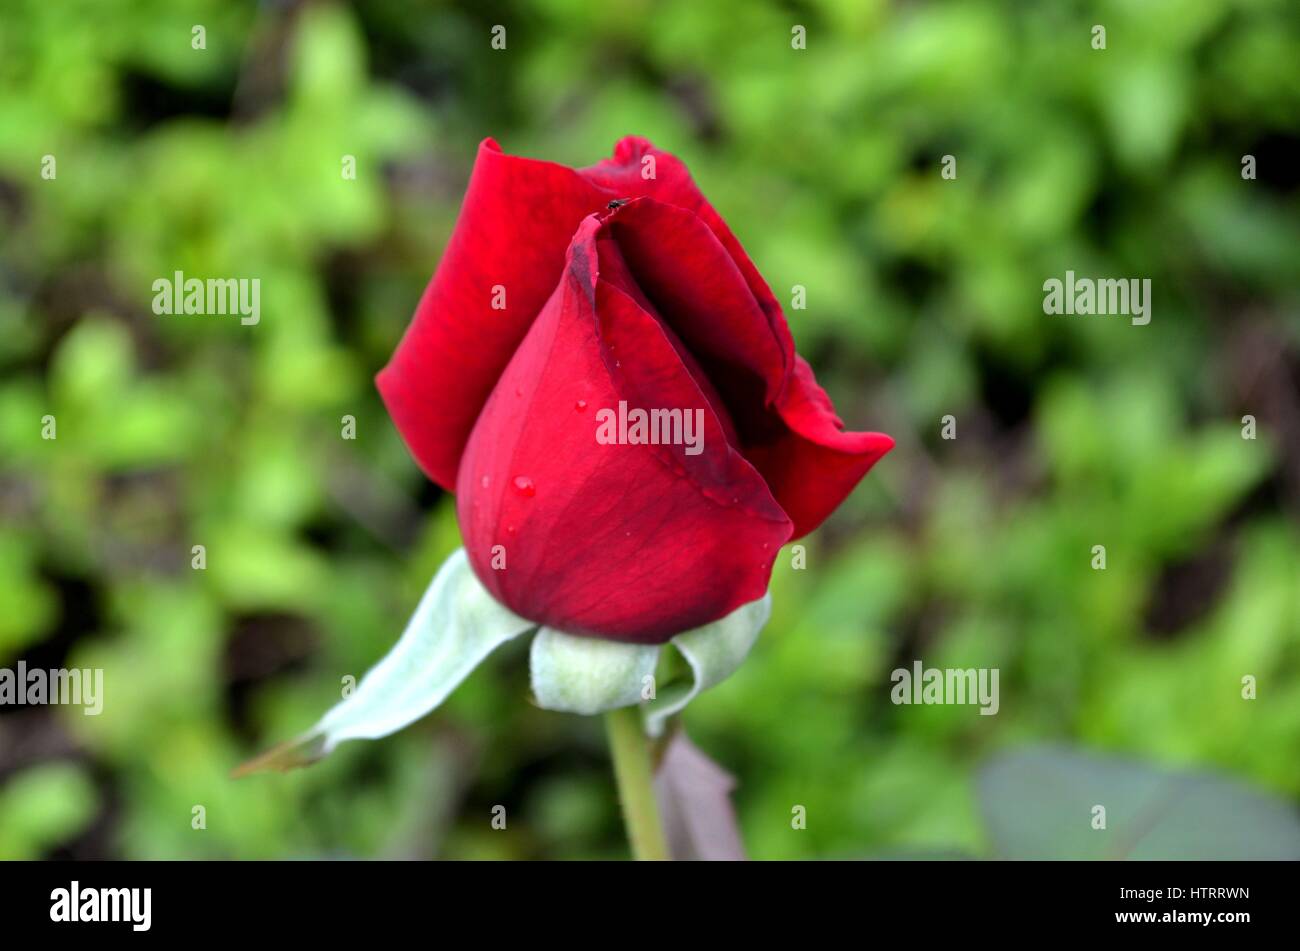 Red rose bud growing in garden zoom in Stock Photo